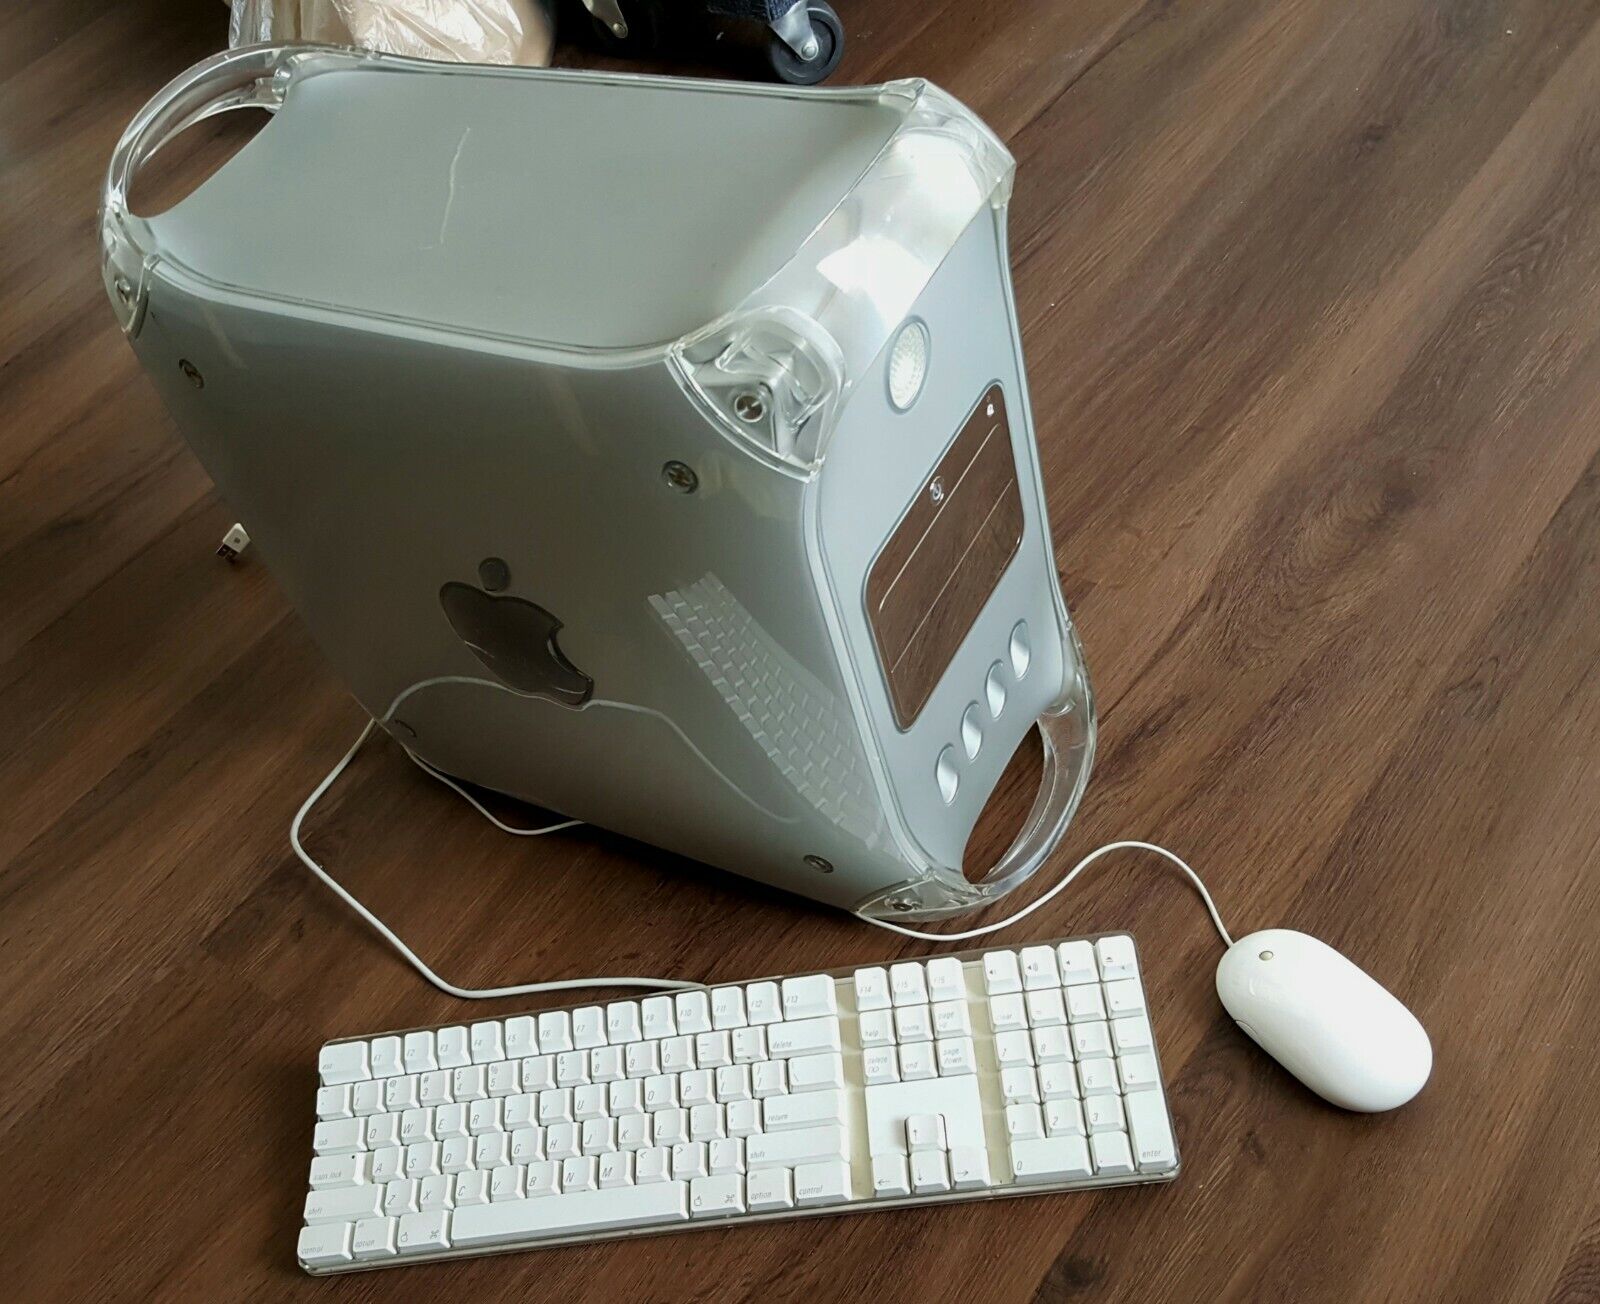 Vintage Original Apple Power Mac G4 Tower Desktop Keyboard mouse Parts Only